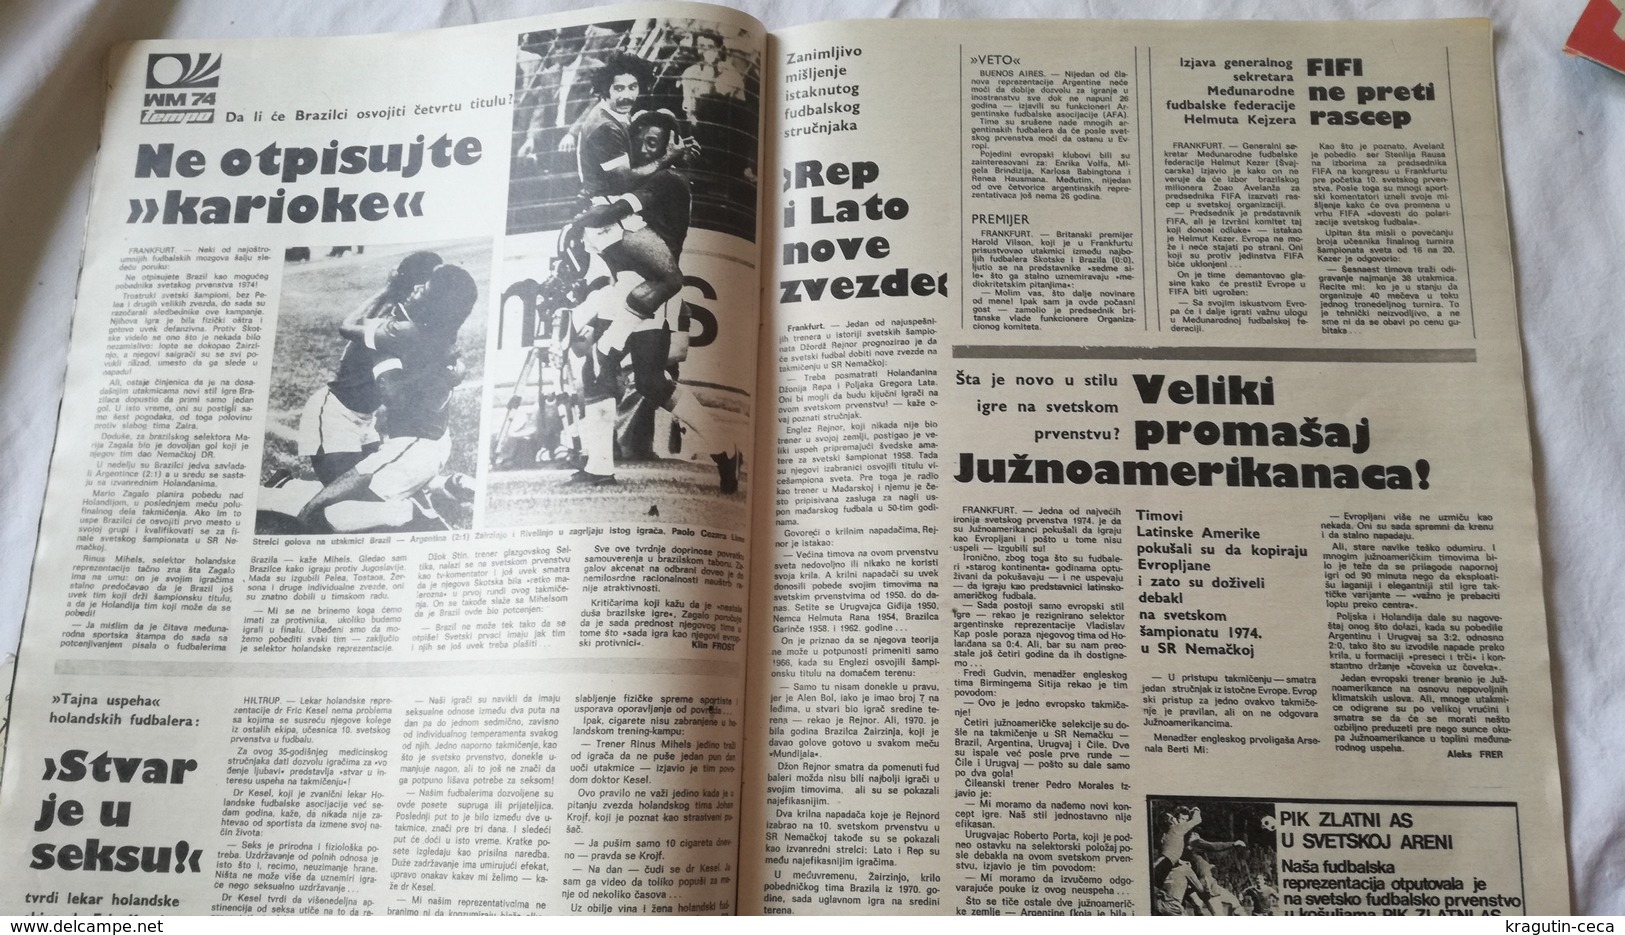 1974 TEMPO YUGOSLAVIA SERBIA SPORT FOOTBALL MAGAZINE NEWSPAPER WM74 CHAMPIONSHIP DZAJIC FOGST MUNDIAL RIJEKA Johan Johan